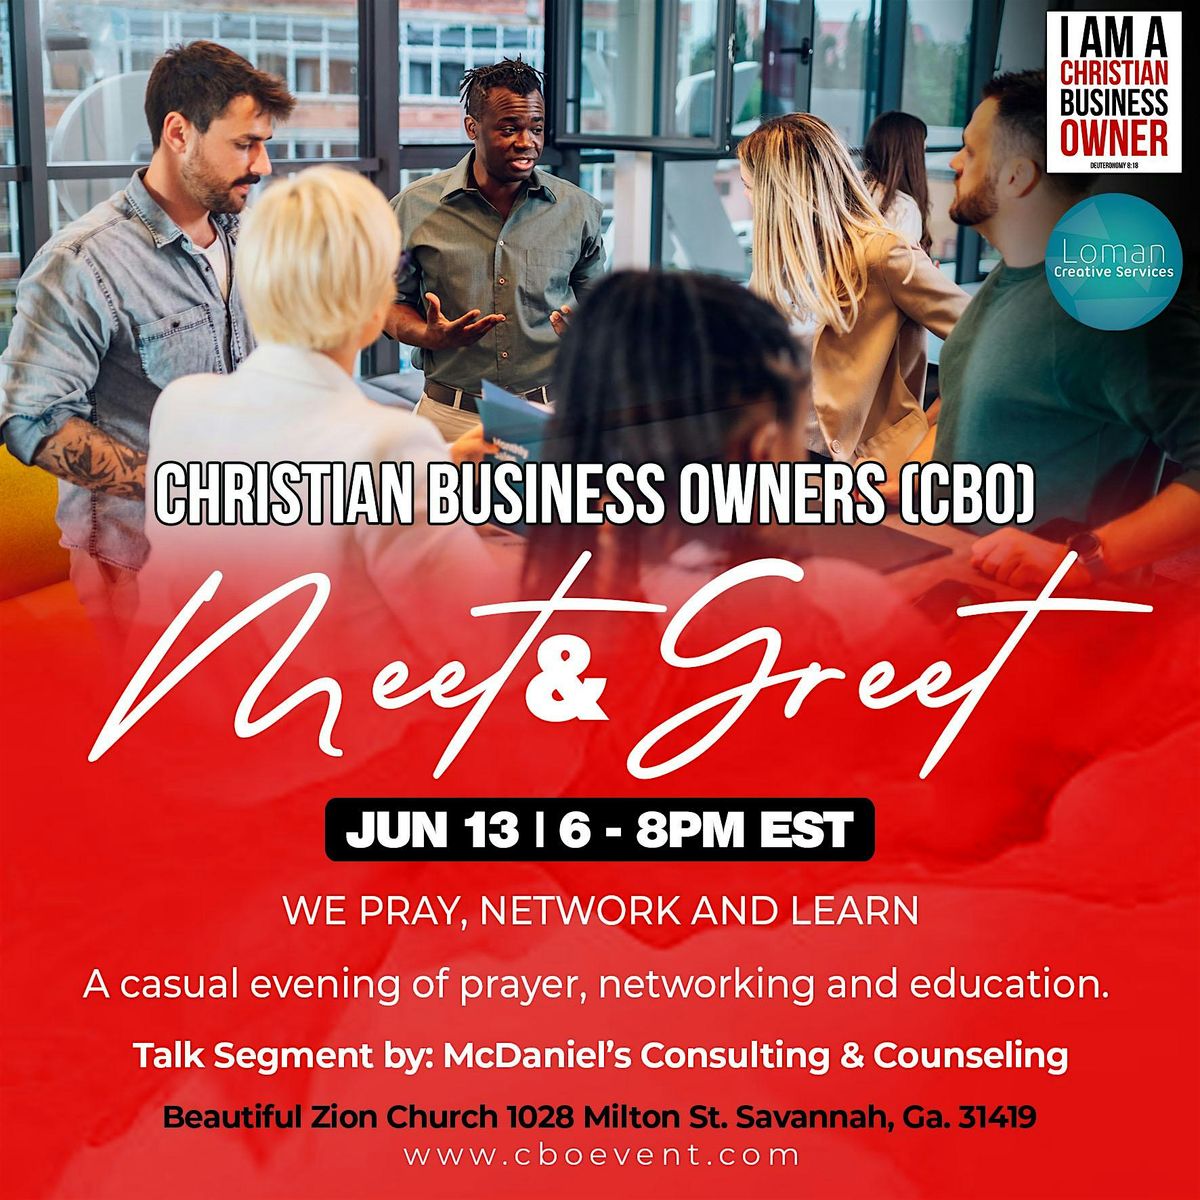 Christian Business Owners Meet & Greet